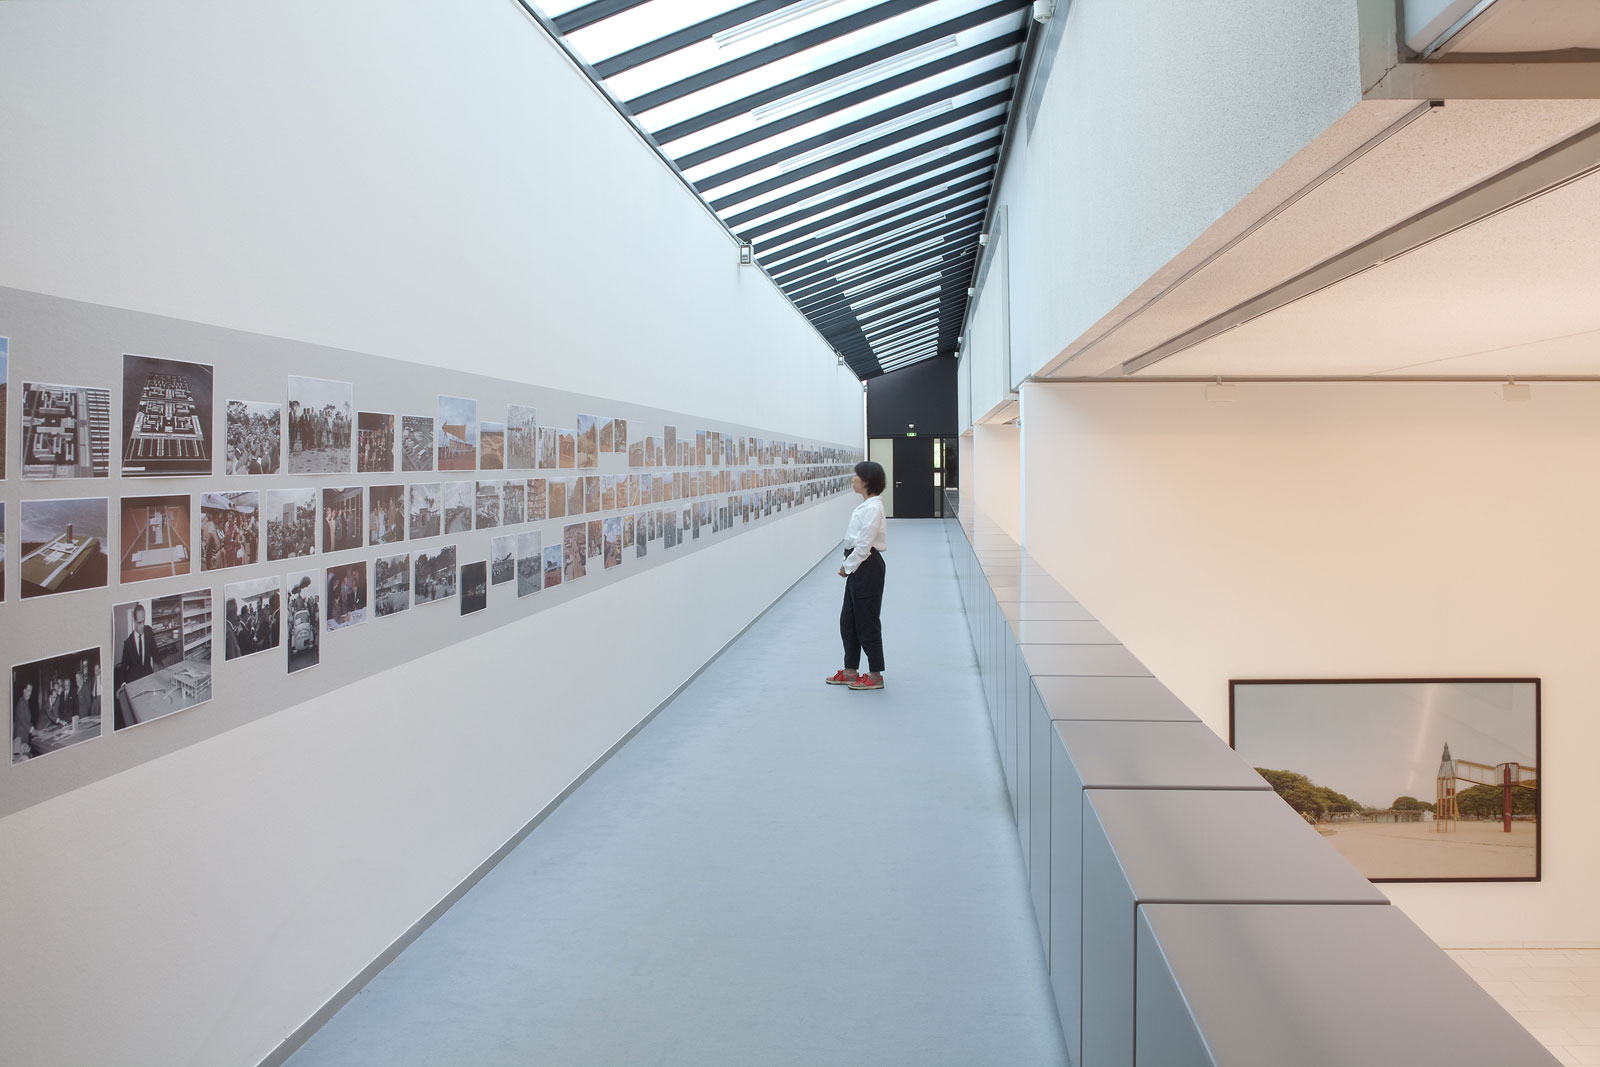 Archiv Utopia, Kunsthalle zu Kiel